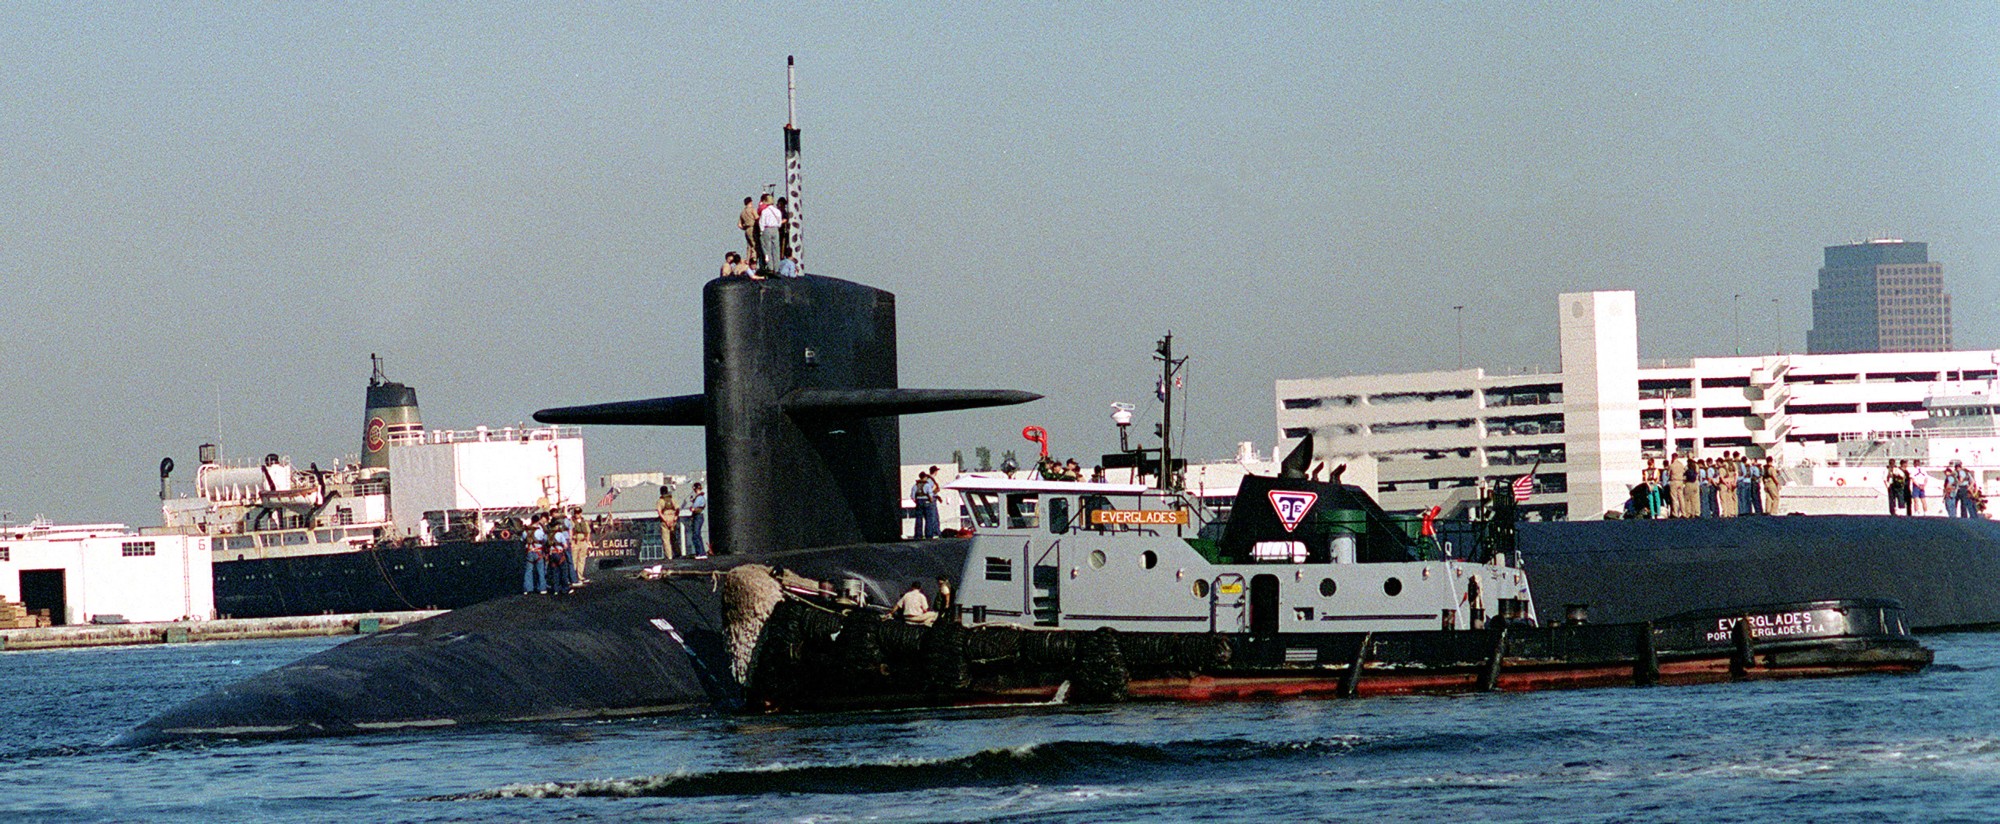 ssbn-728 uss florida ballistic missile submarine us navy 1995 60